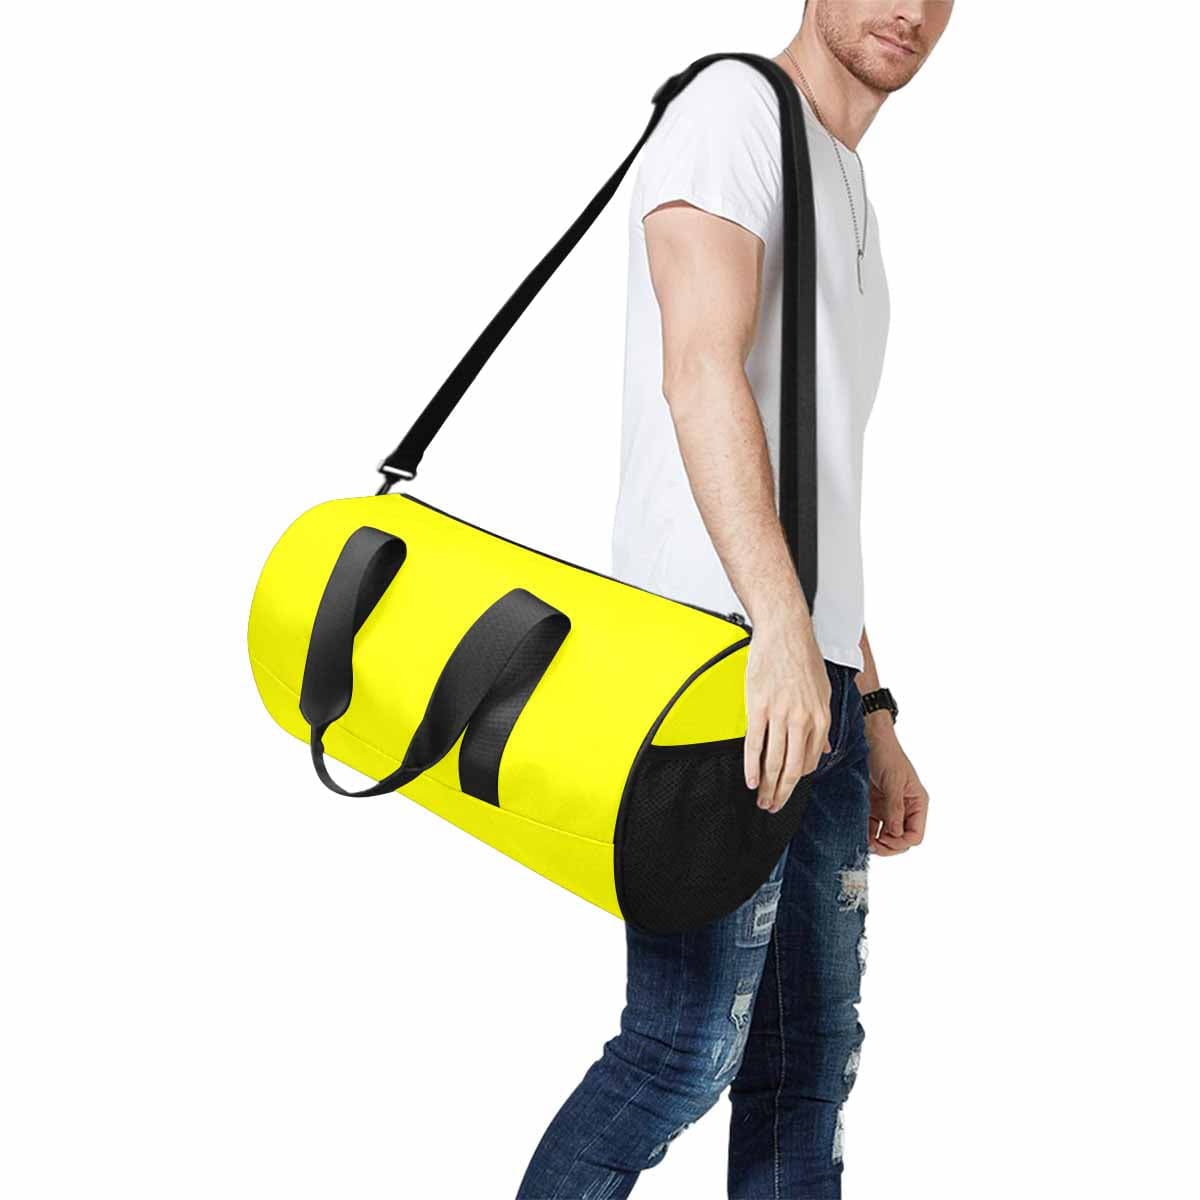 Duffel Bag Yellow Travel Carry On - Bags | Duffel Bags